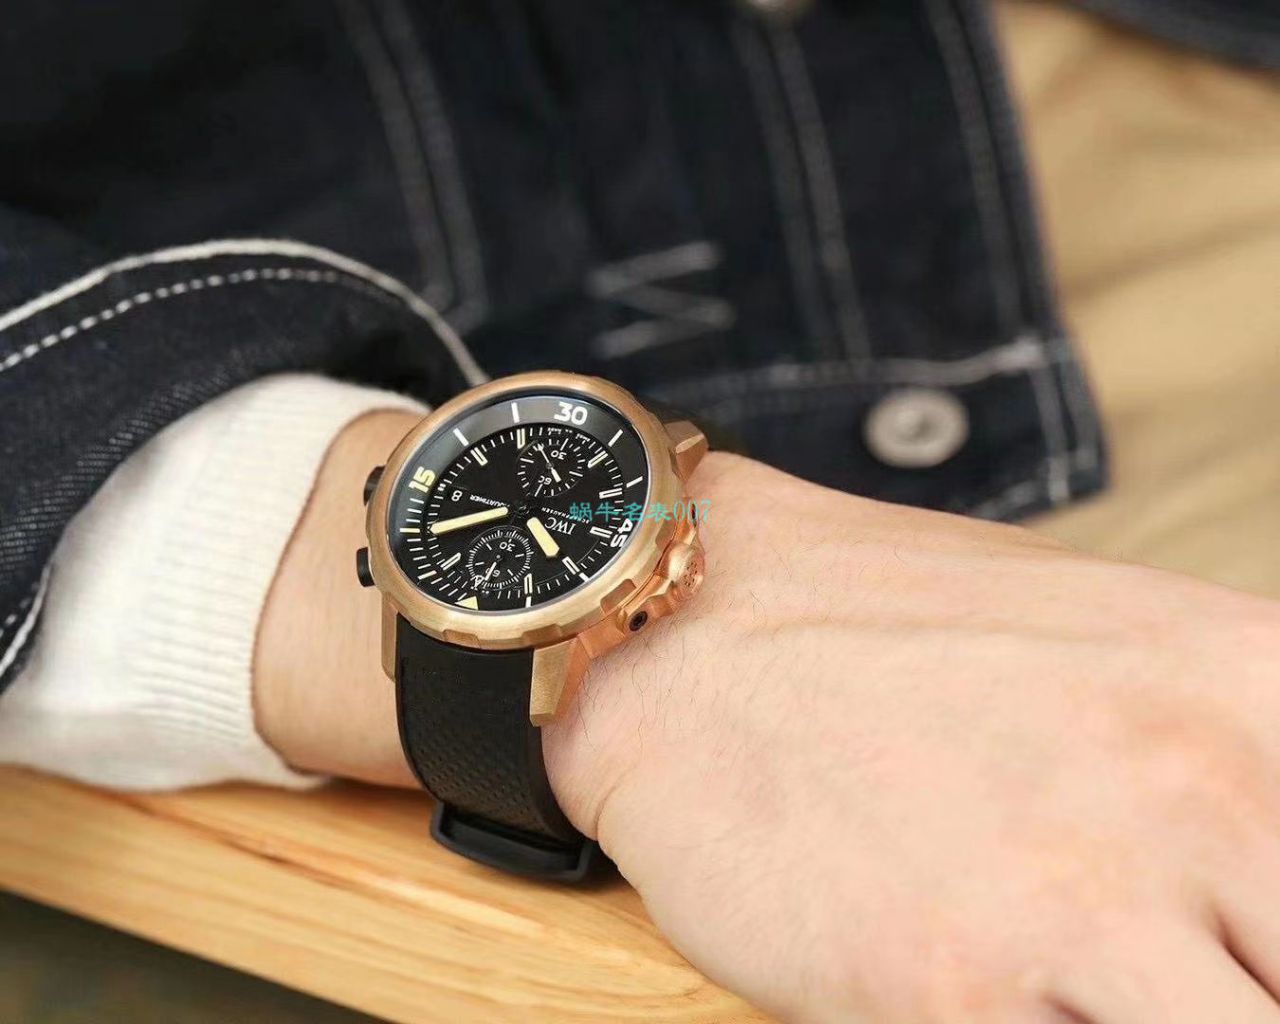 V6厂万国海洋时计复刻手表IW379503青铜达尔文探险之旅特别版  / WG582V6